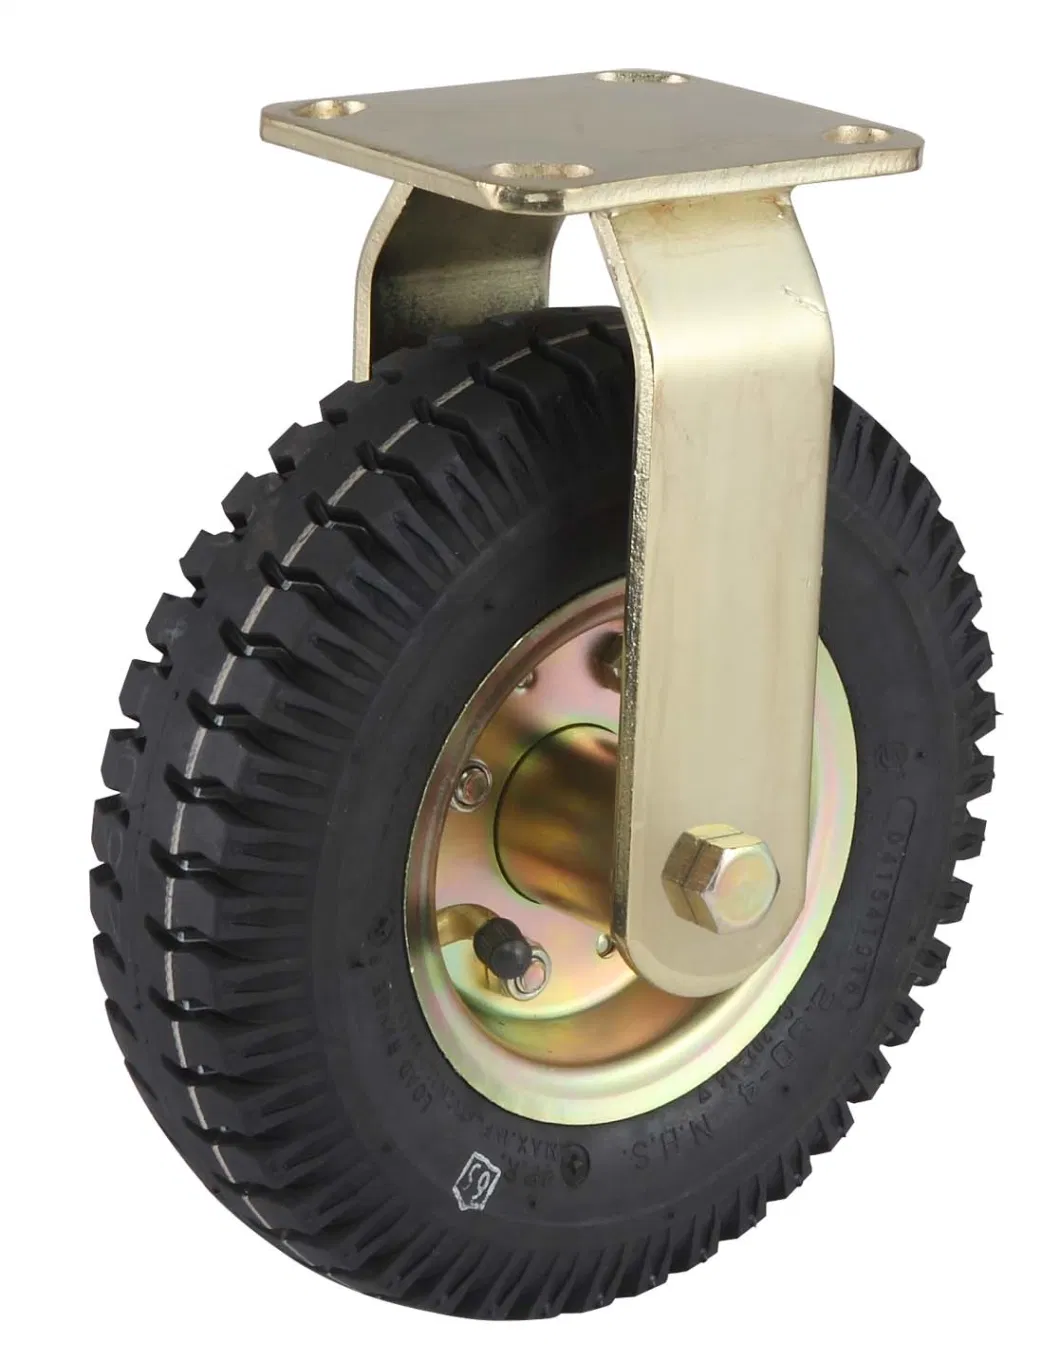 Rubber Tire Pneumatic Caster Wheel